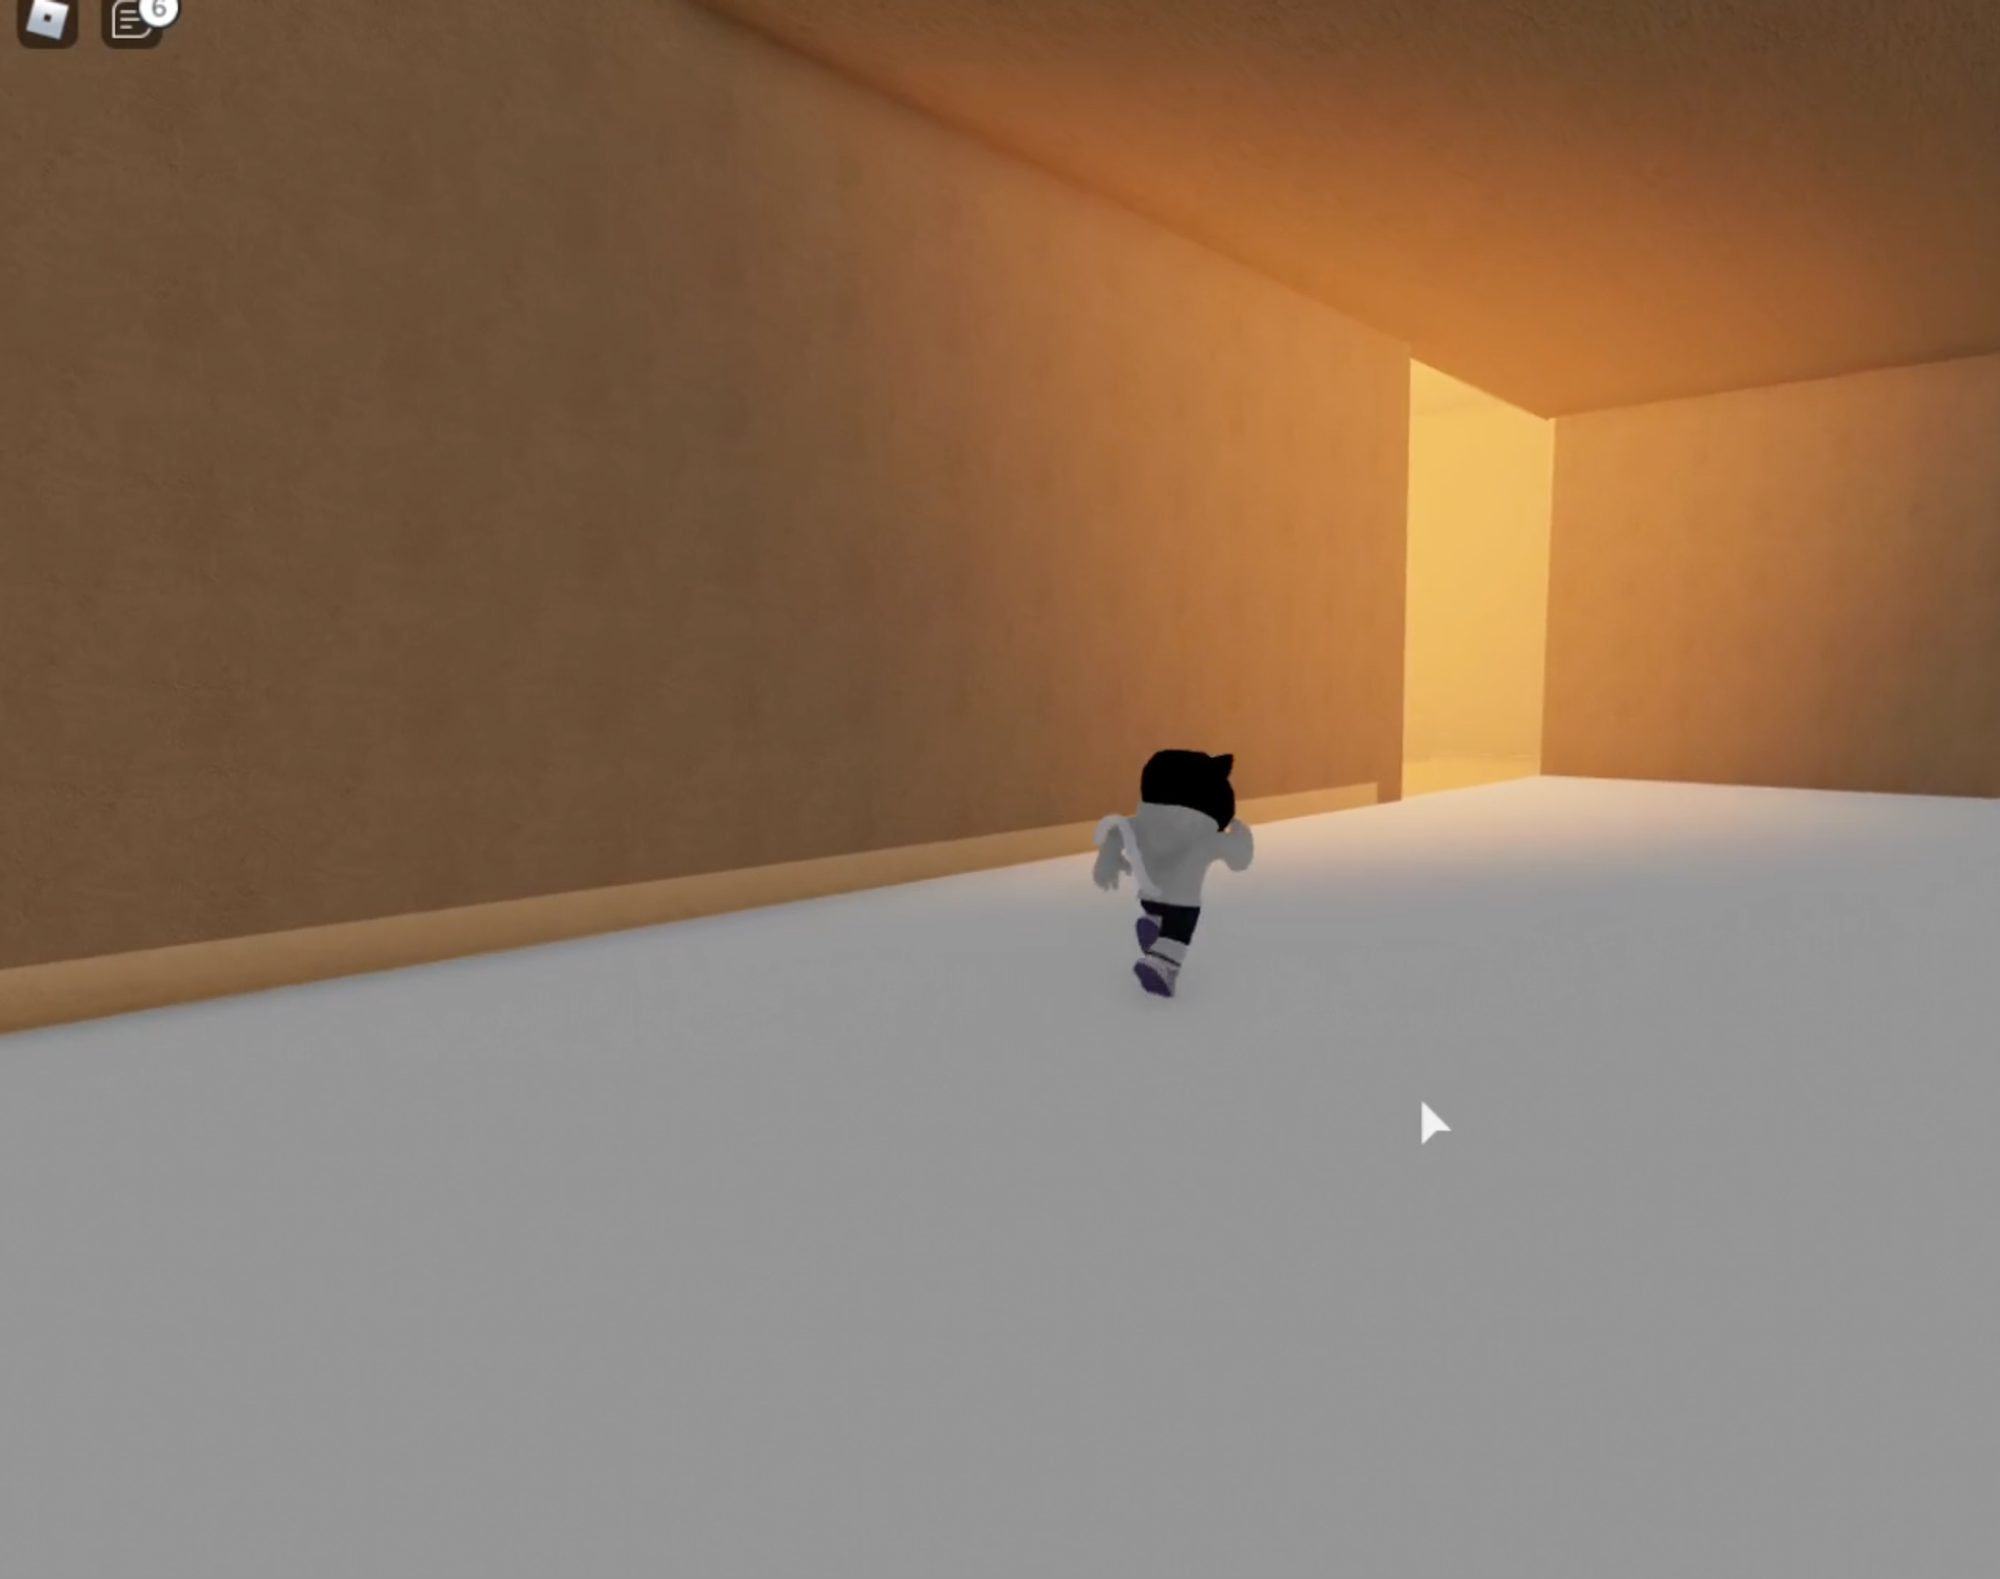 My avatar running towards a bright doorway.